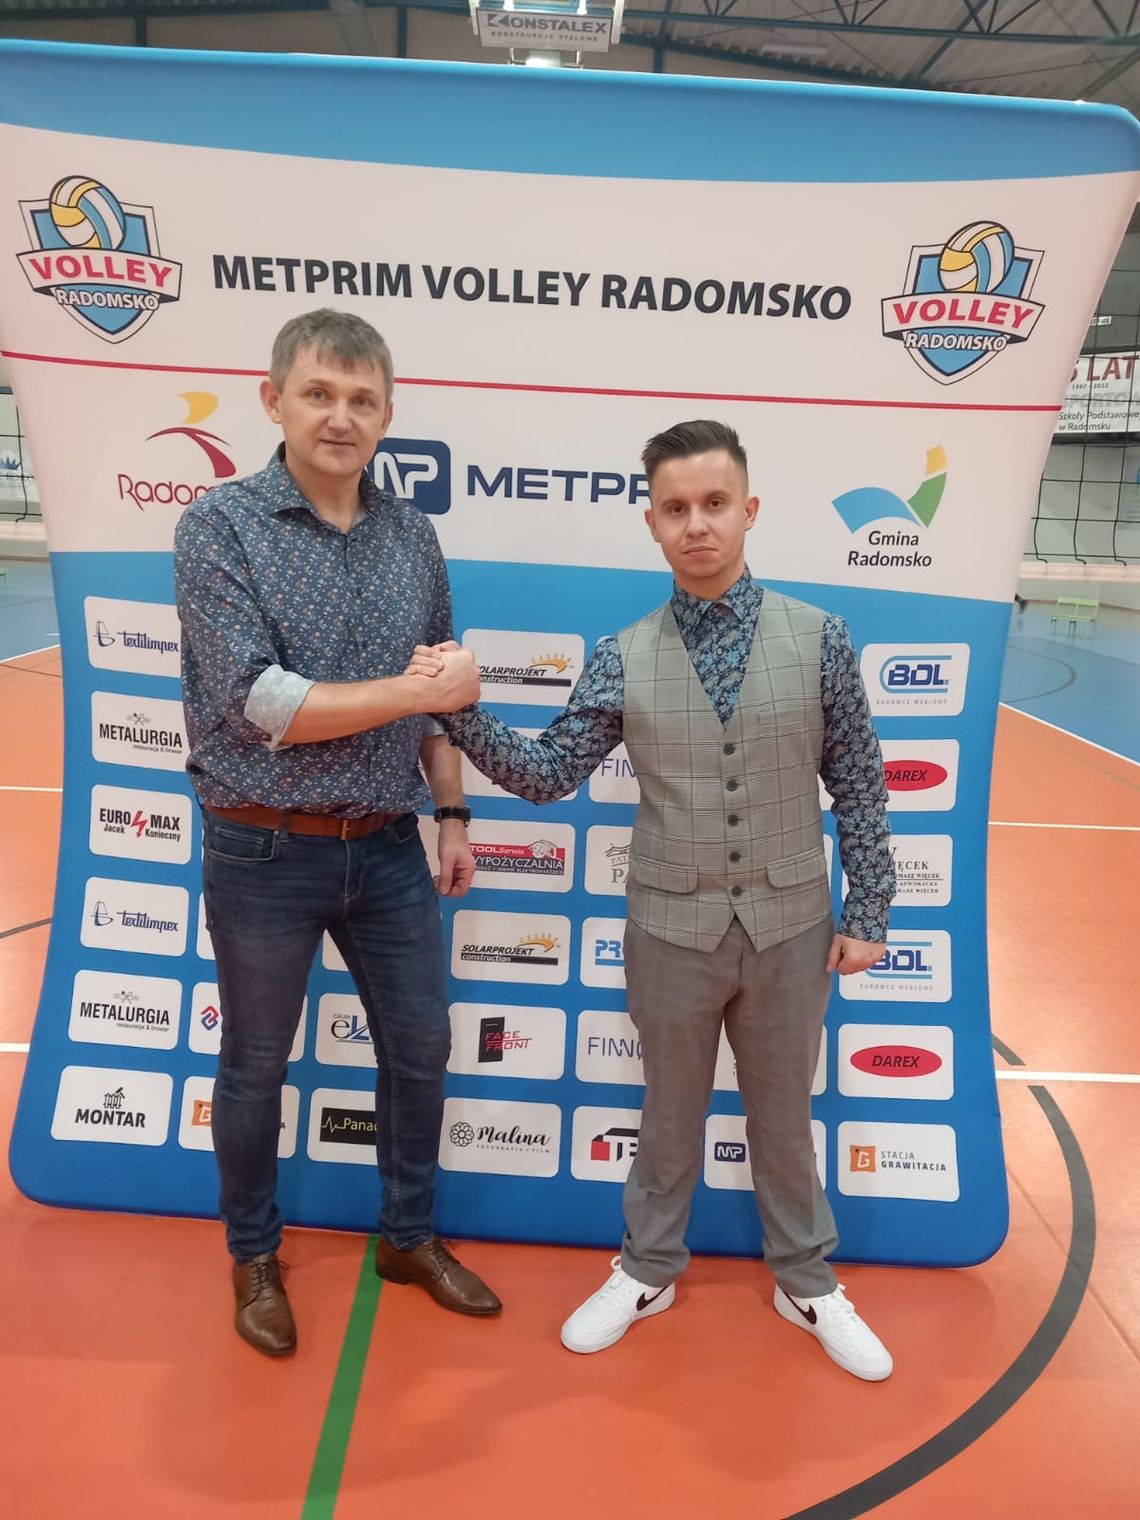 Telewizja Lokalna.News patronem medialnym METPRIM Volley Radomsko